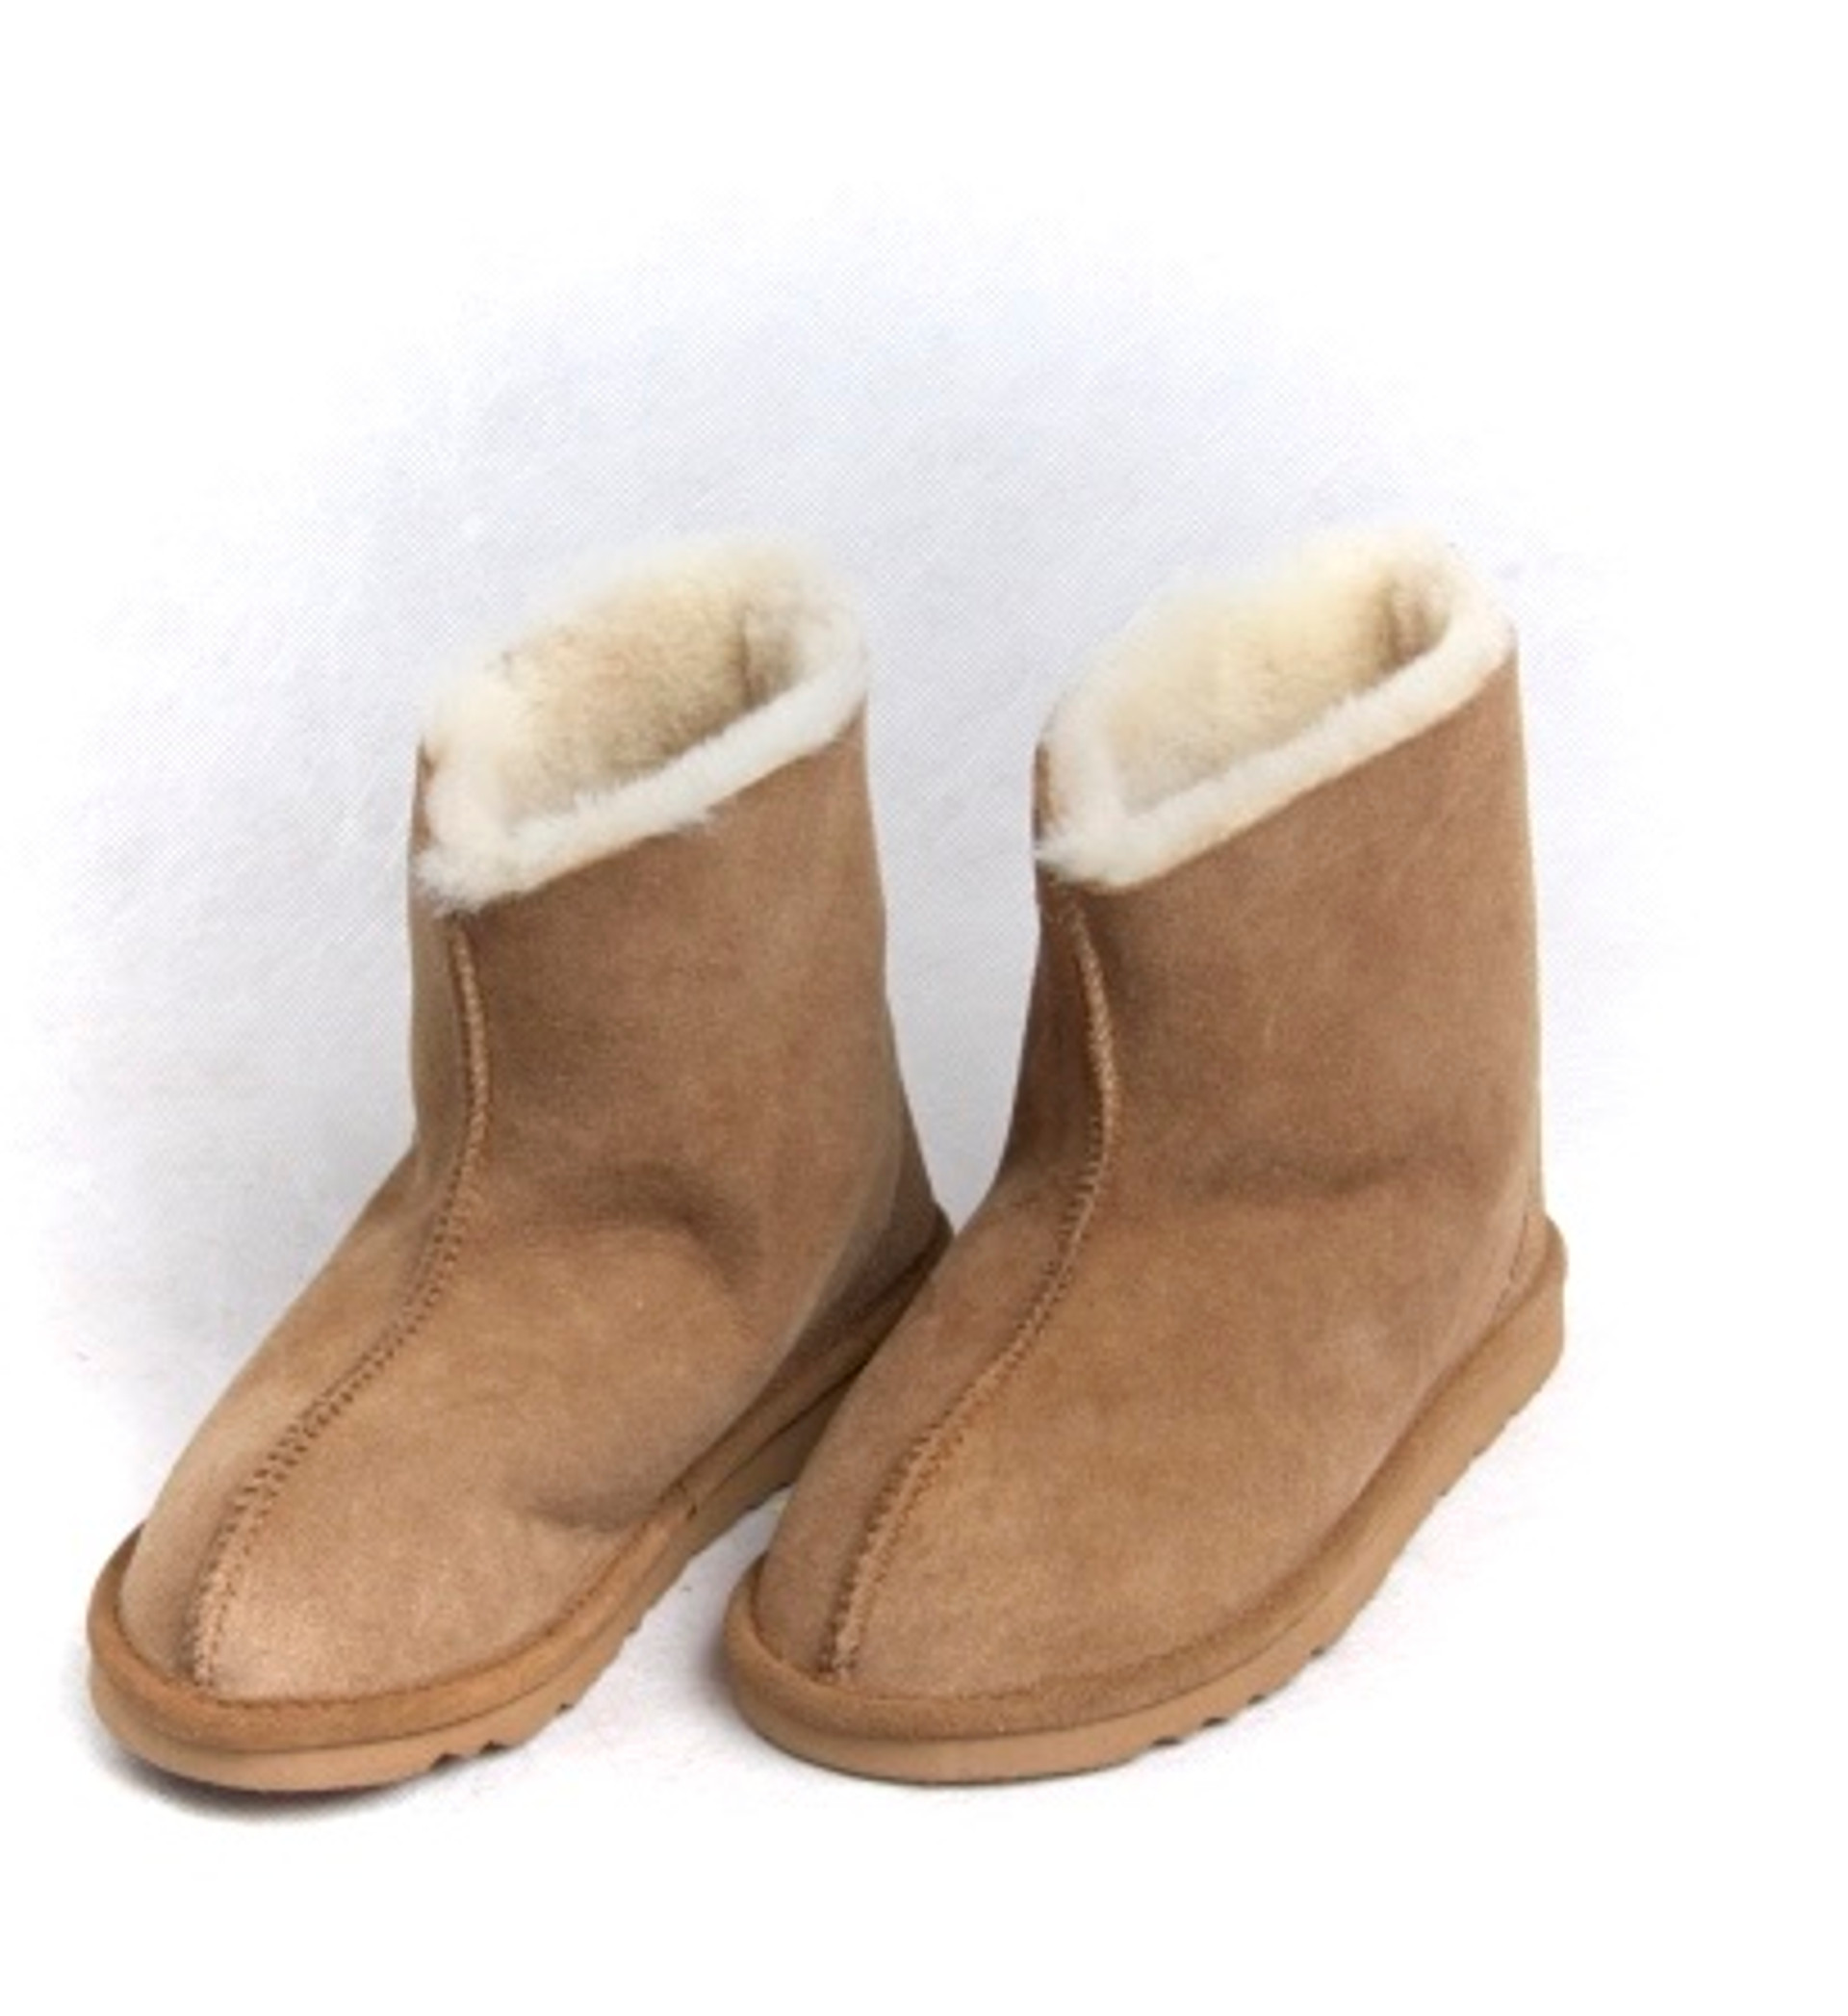 Ugg Boots, Australian Sheepskin Products & Souvenirs